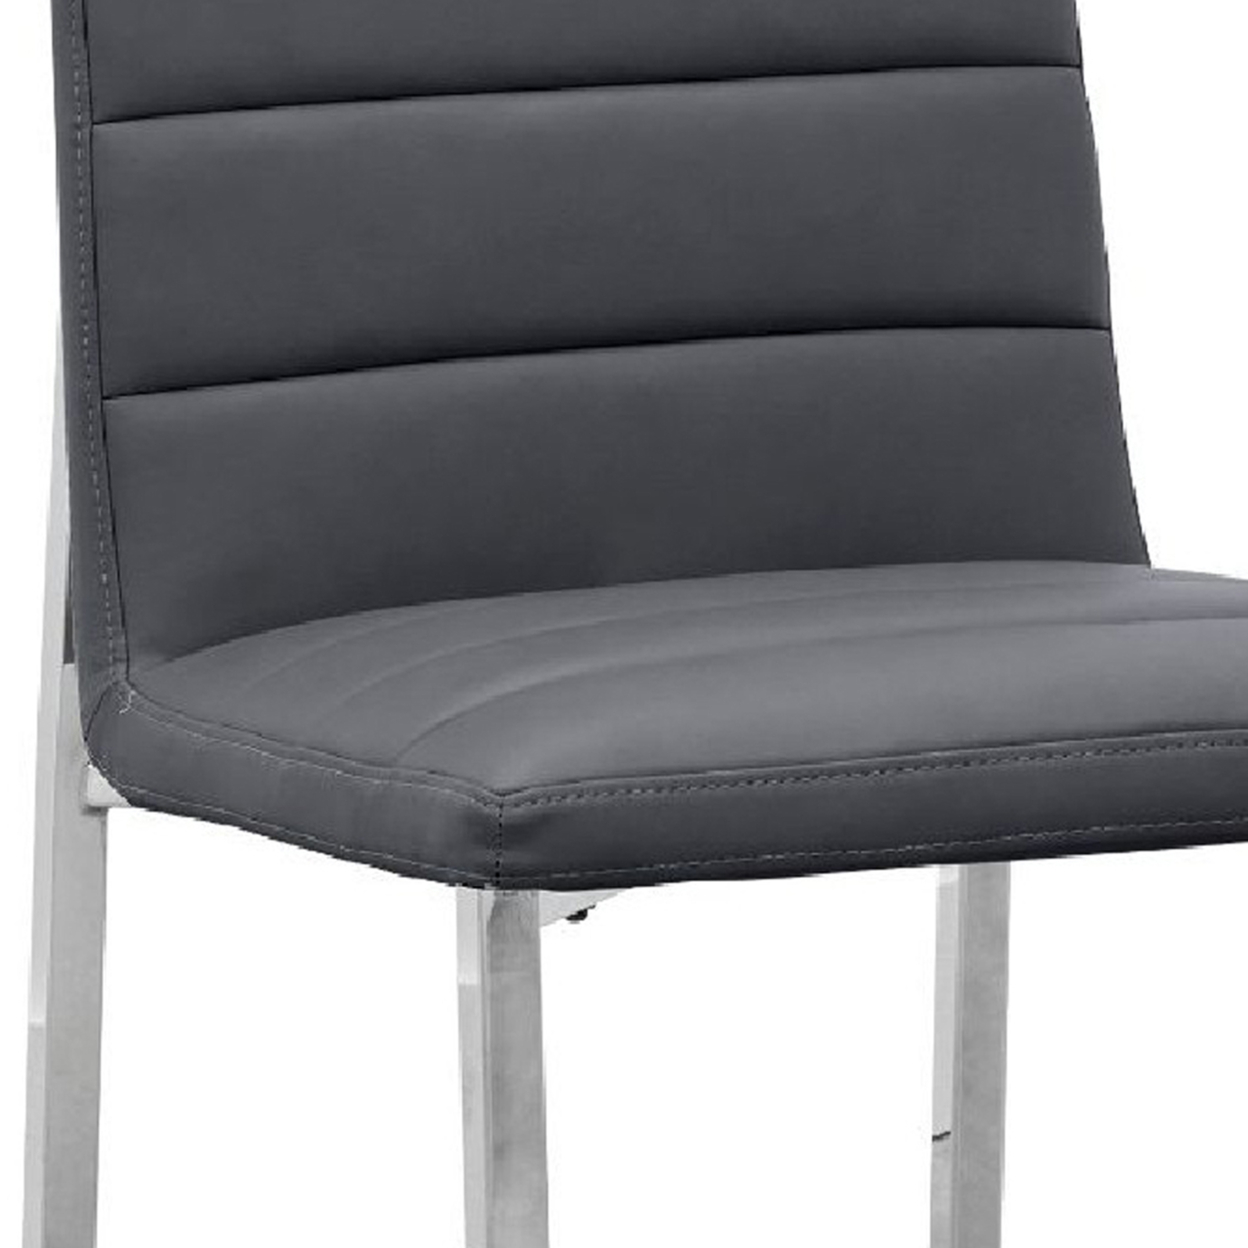 Eun 23 Inch Faux Leather Dining Chair, Chrome Legs, Set Of 2, Dark Gray- Saltoro Sherpi